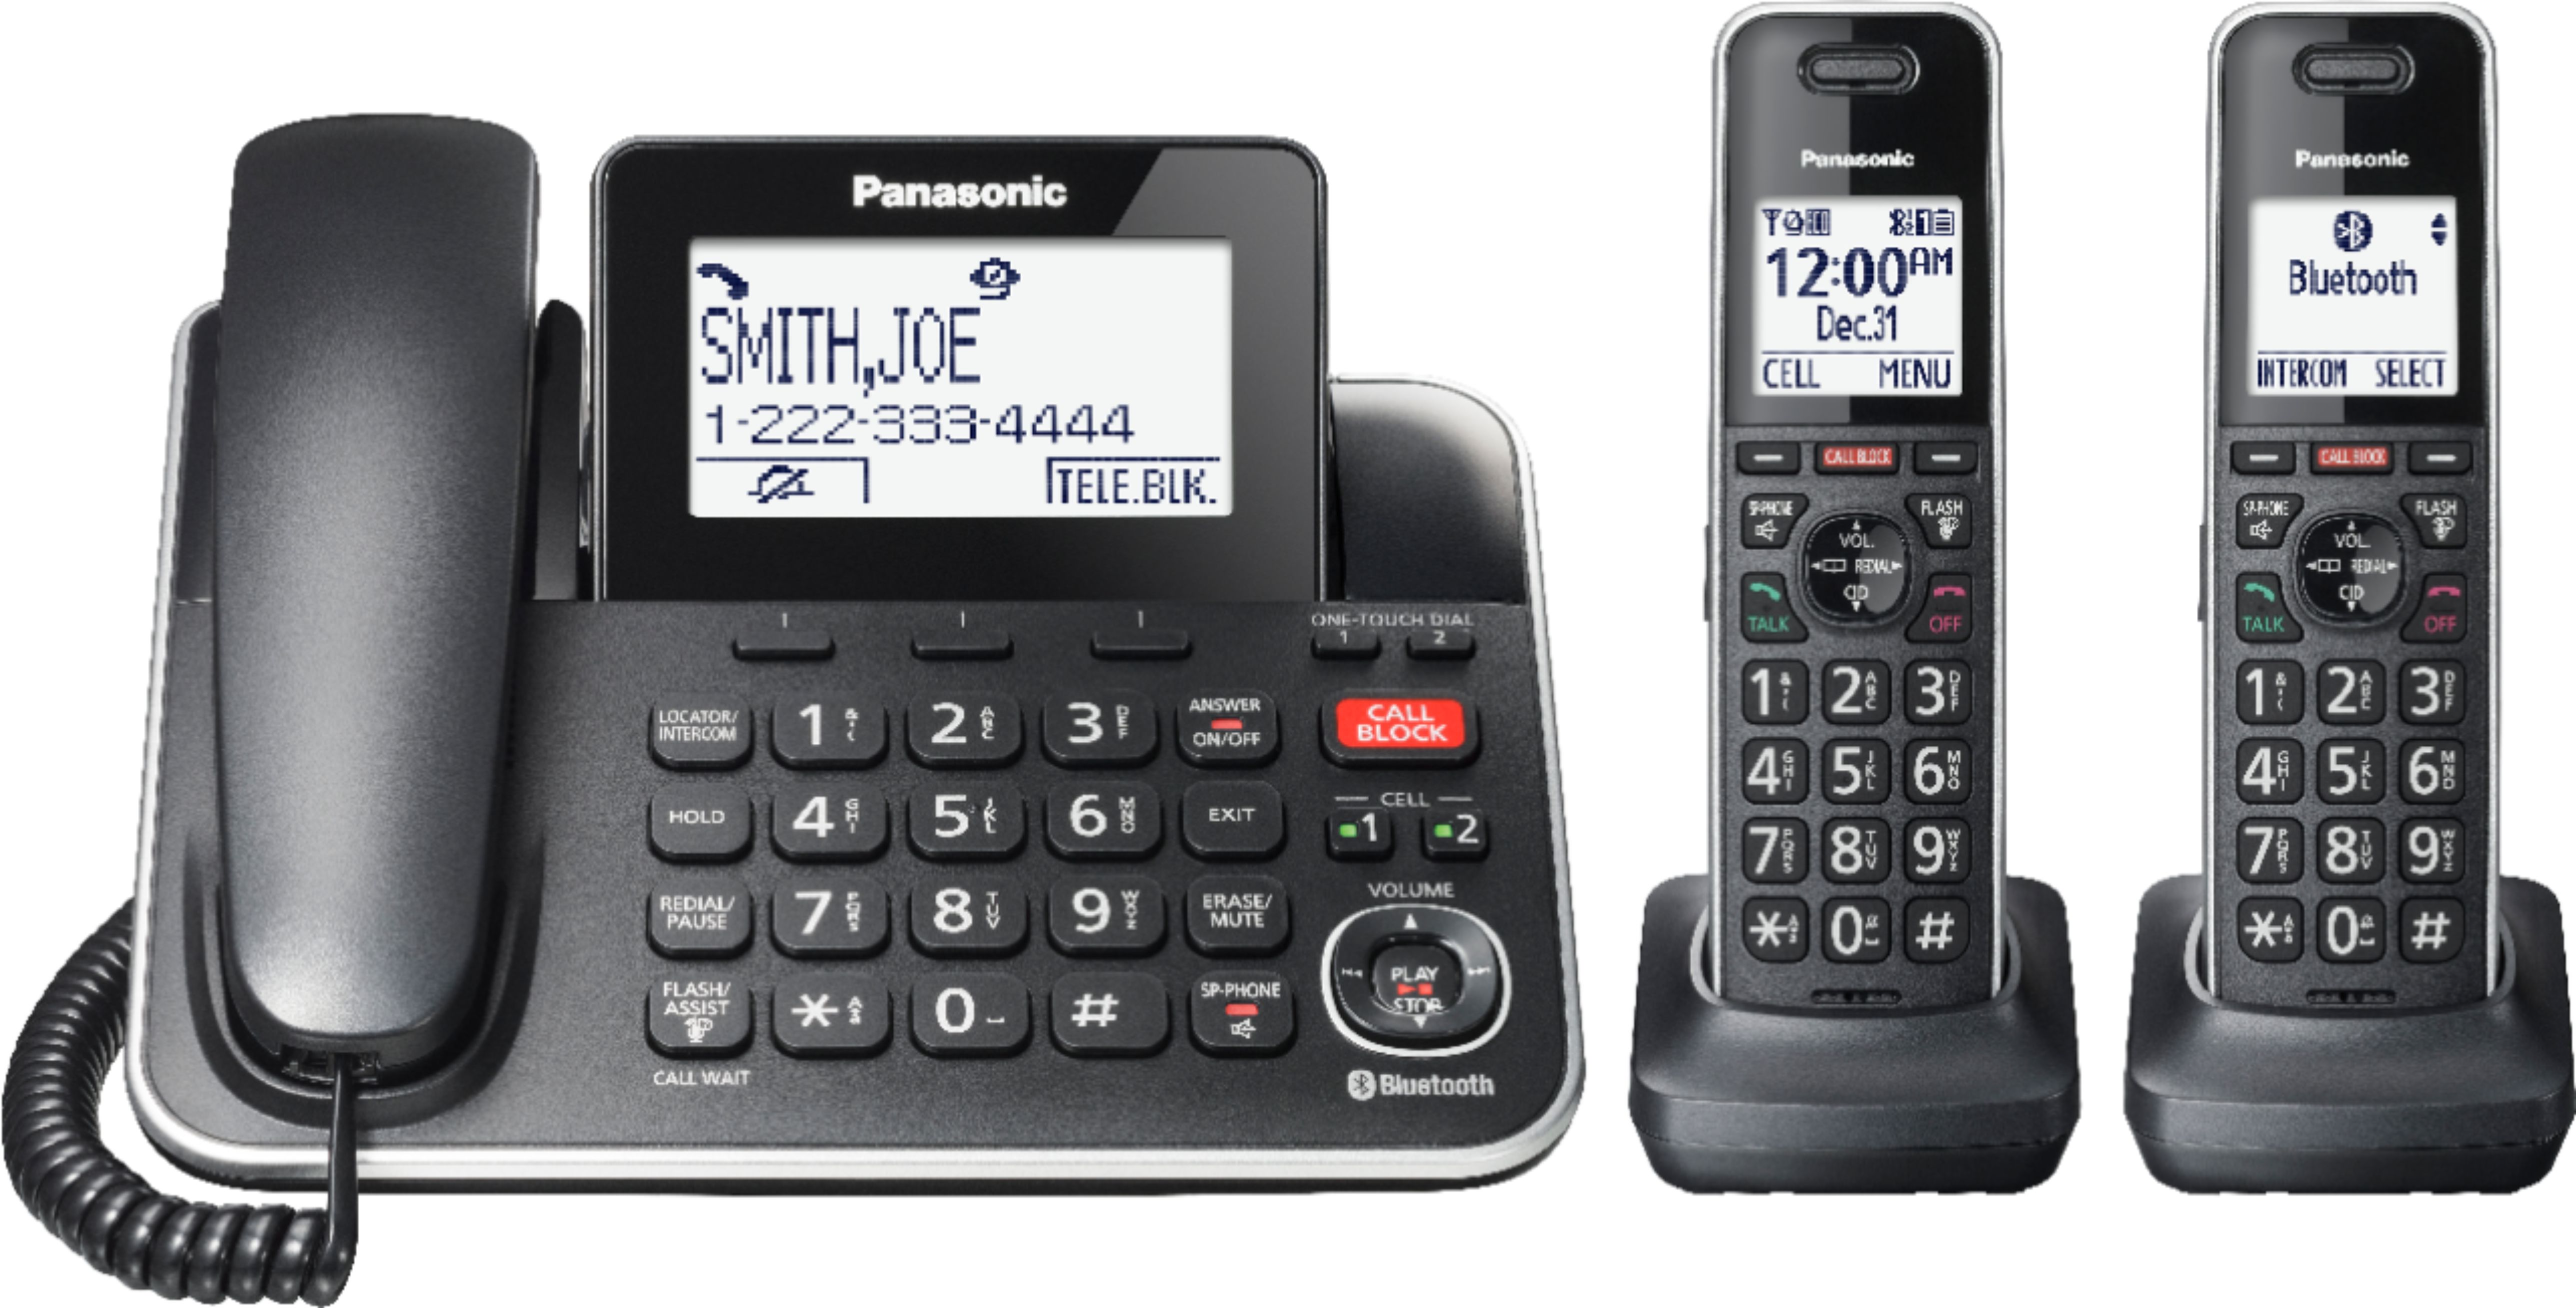 Panasonic - Corded/Cordless Phone - Black